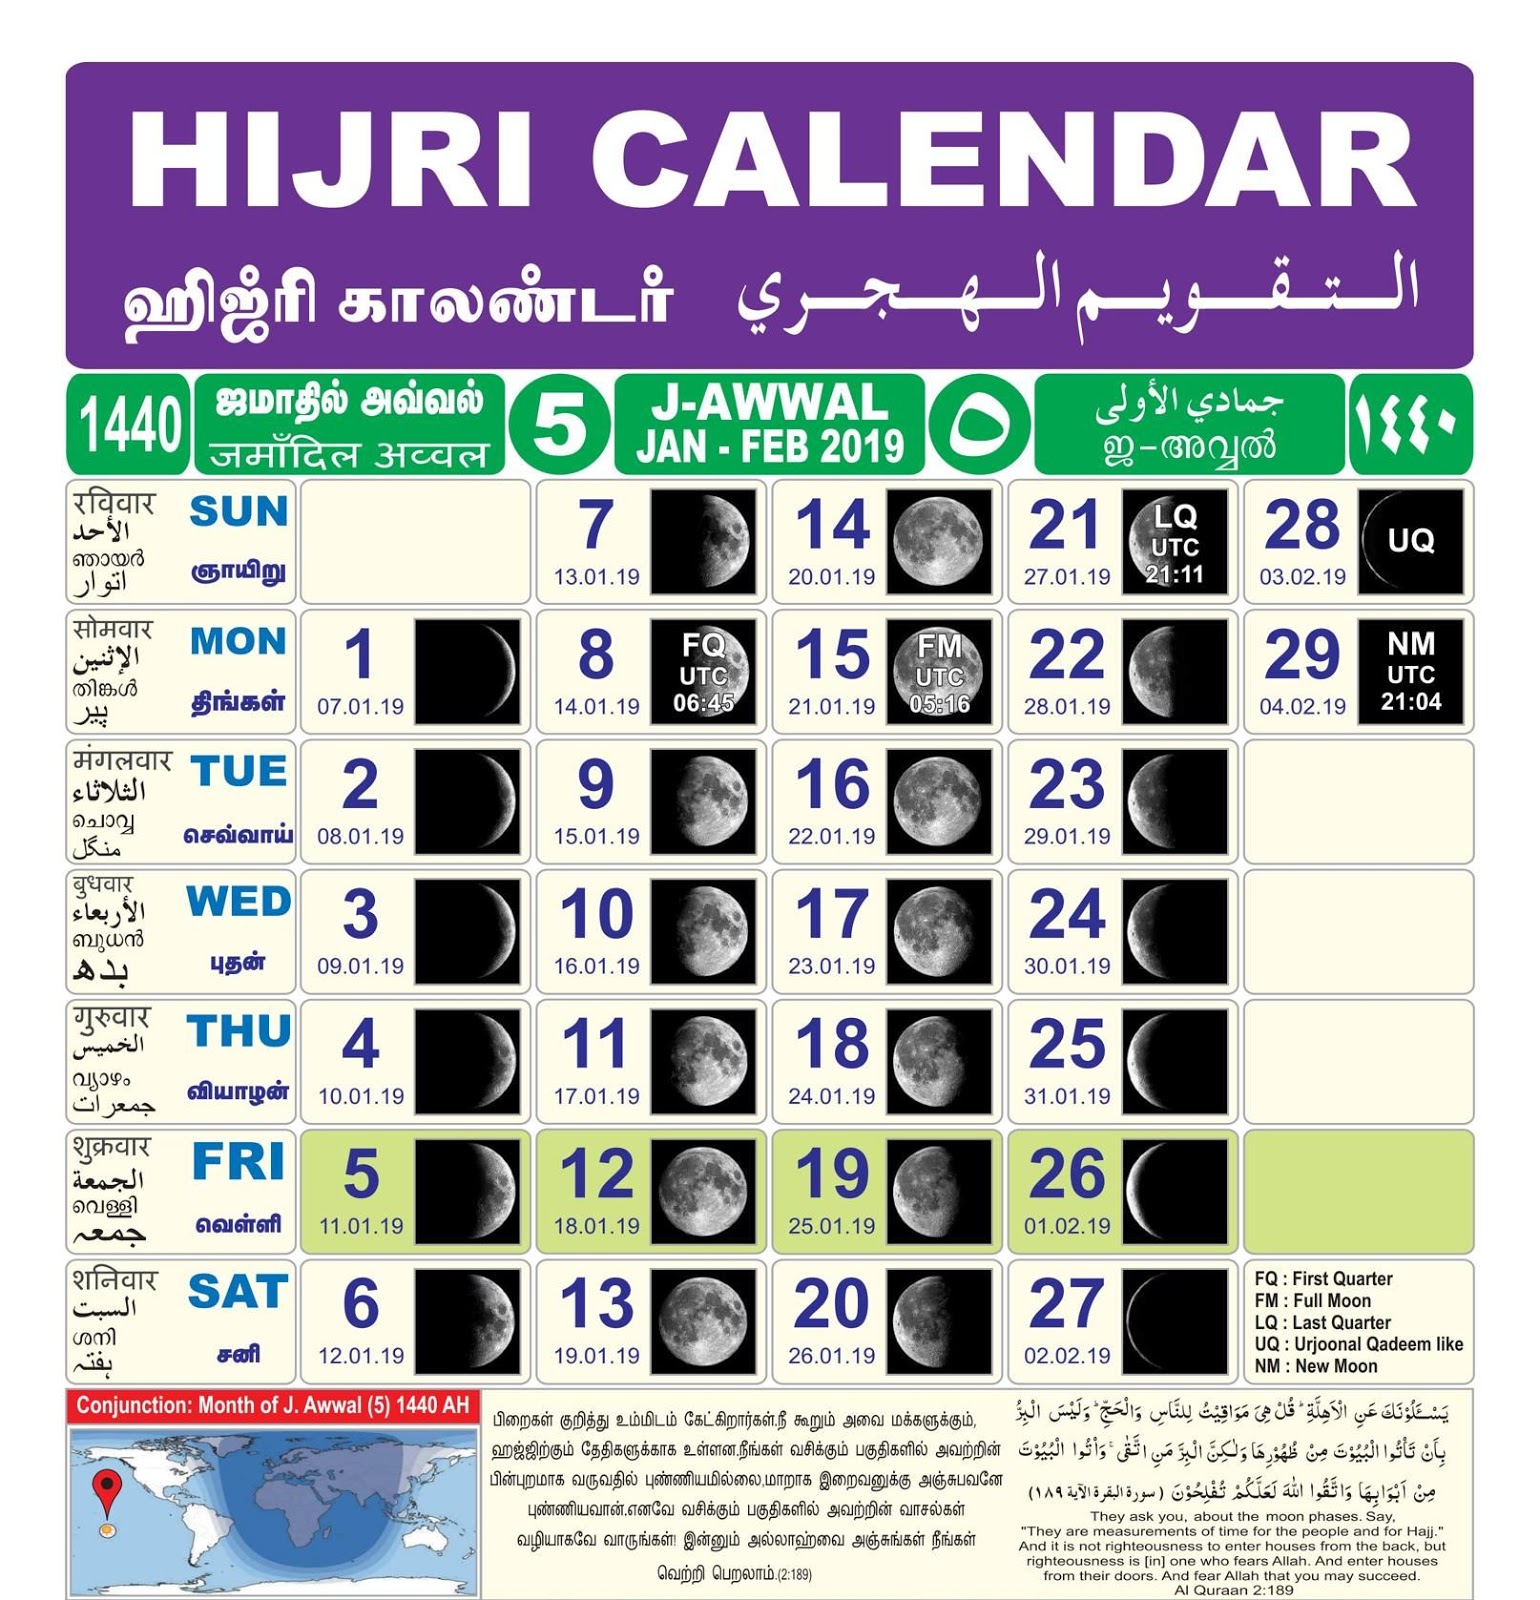 islamic-month-beginning-discussion-hijri-calendar-1440